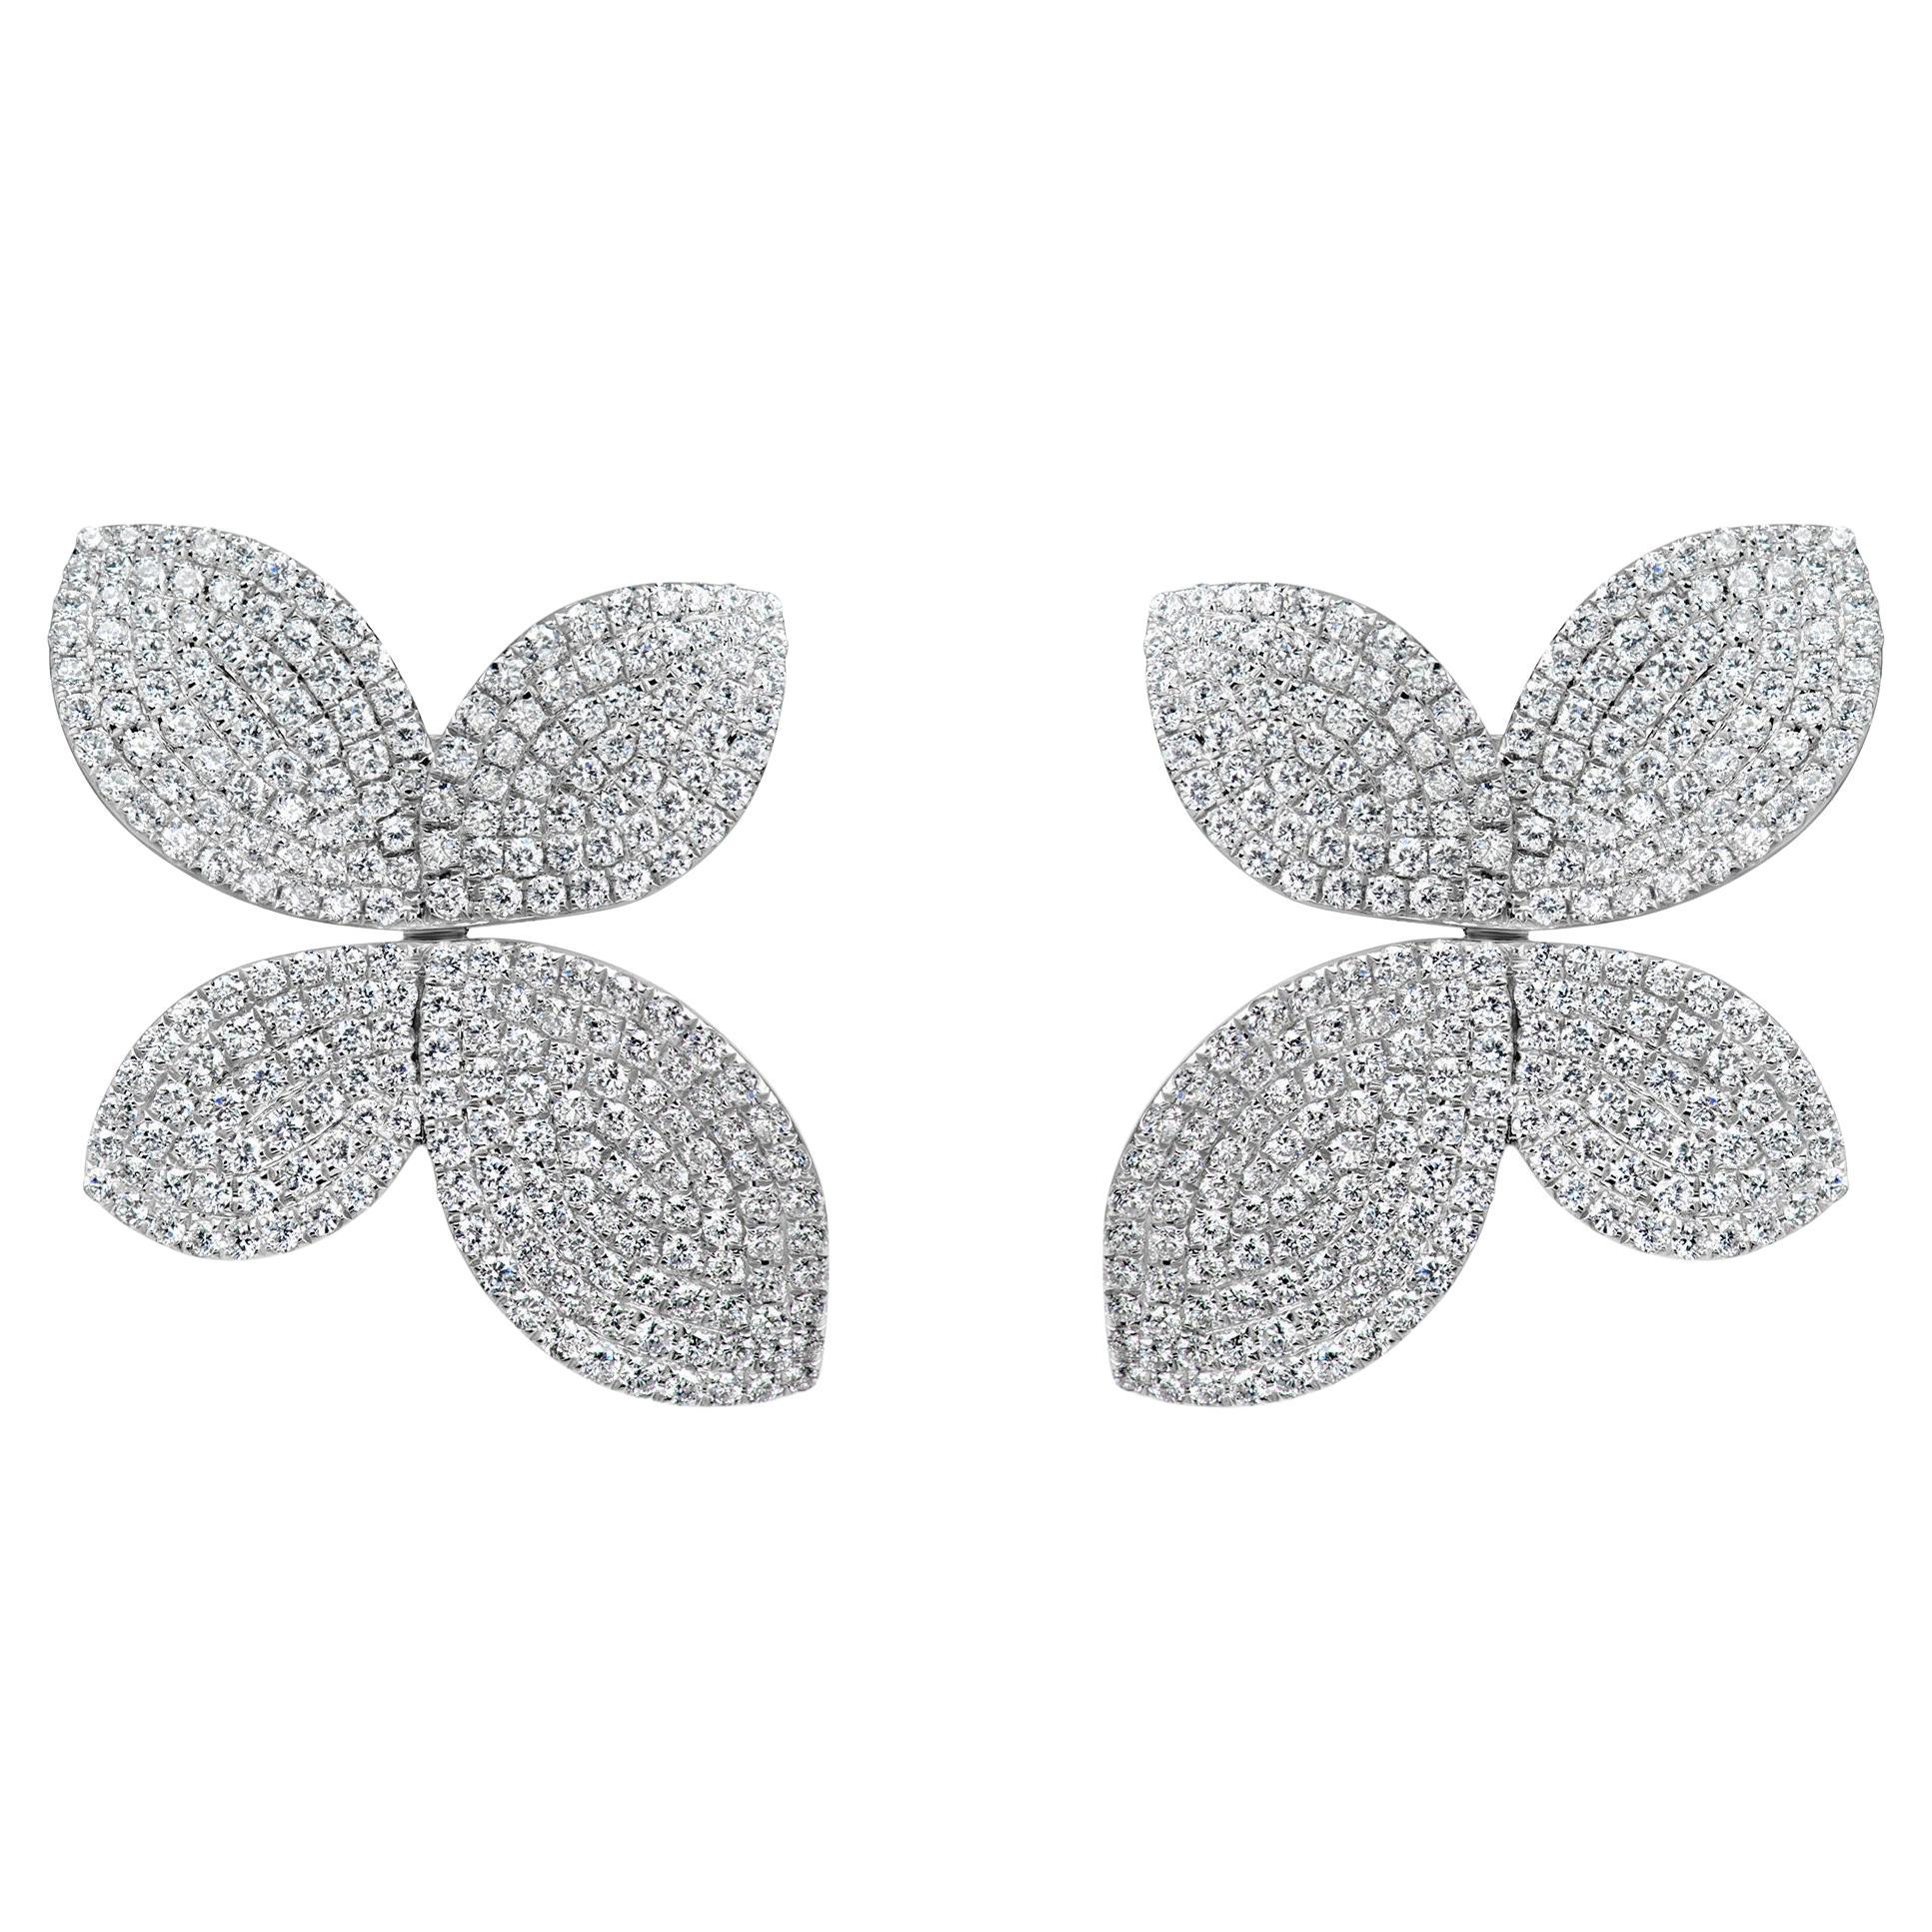 Afarin Collection Pavé Garden Diamond Earrings Set in 18kt White Gold